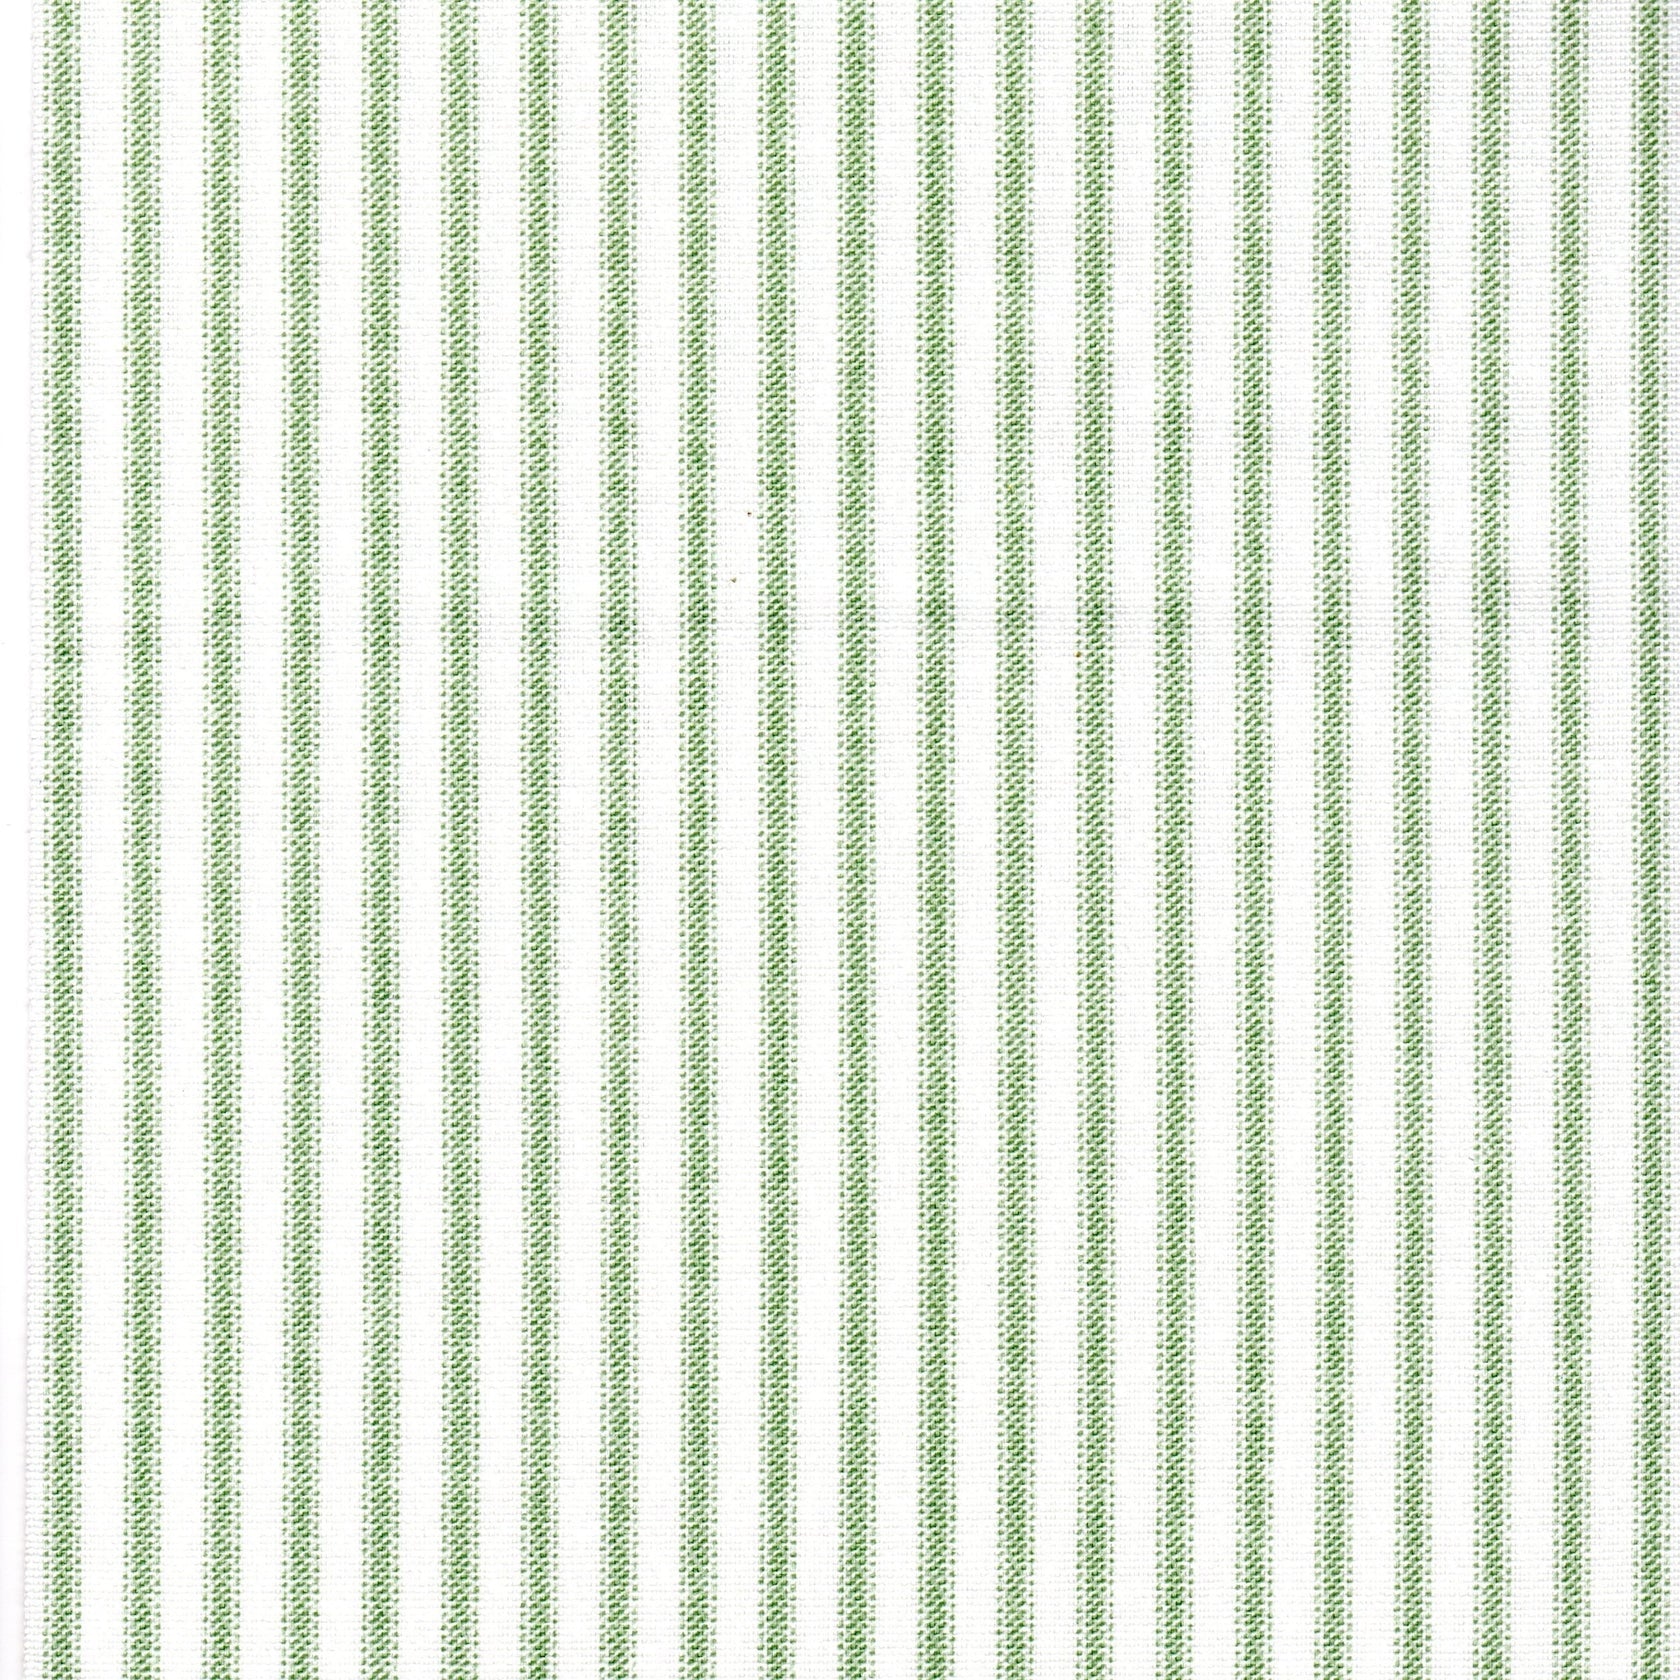 pillow sham in Classic Sage Green Ticking Stripe on White